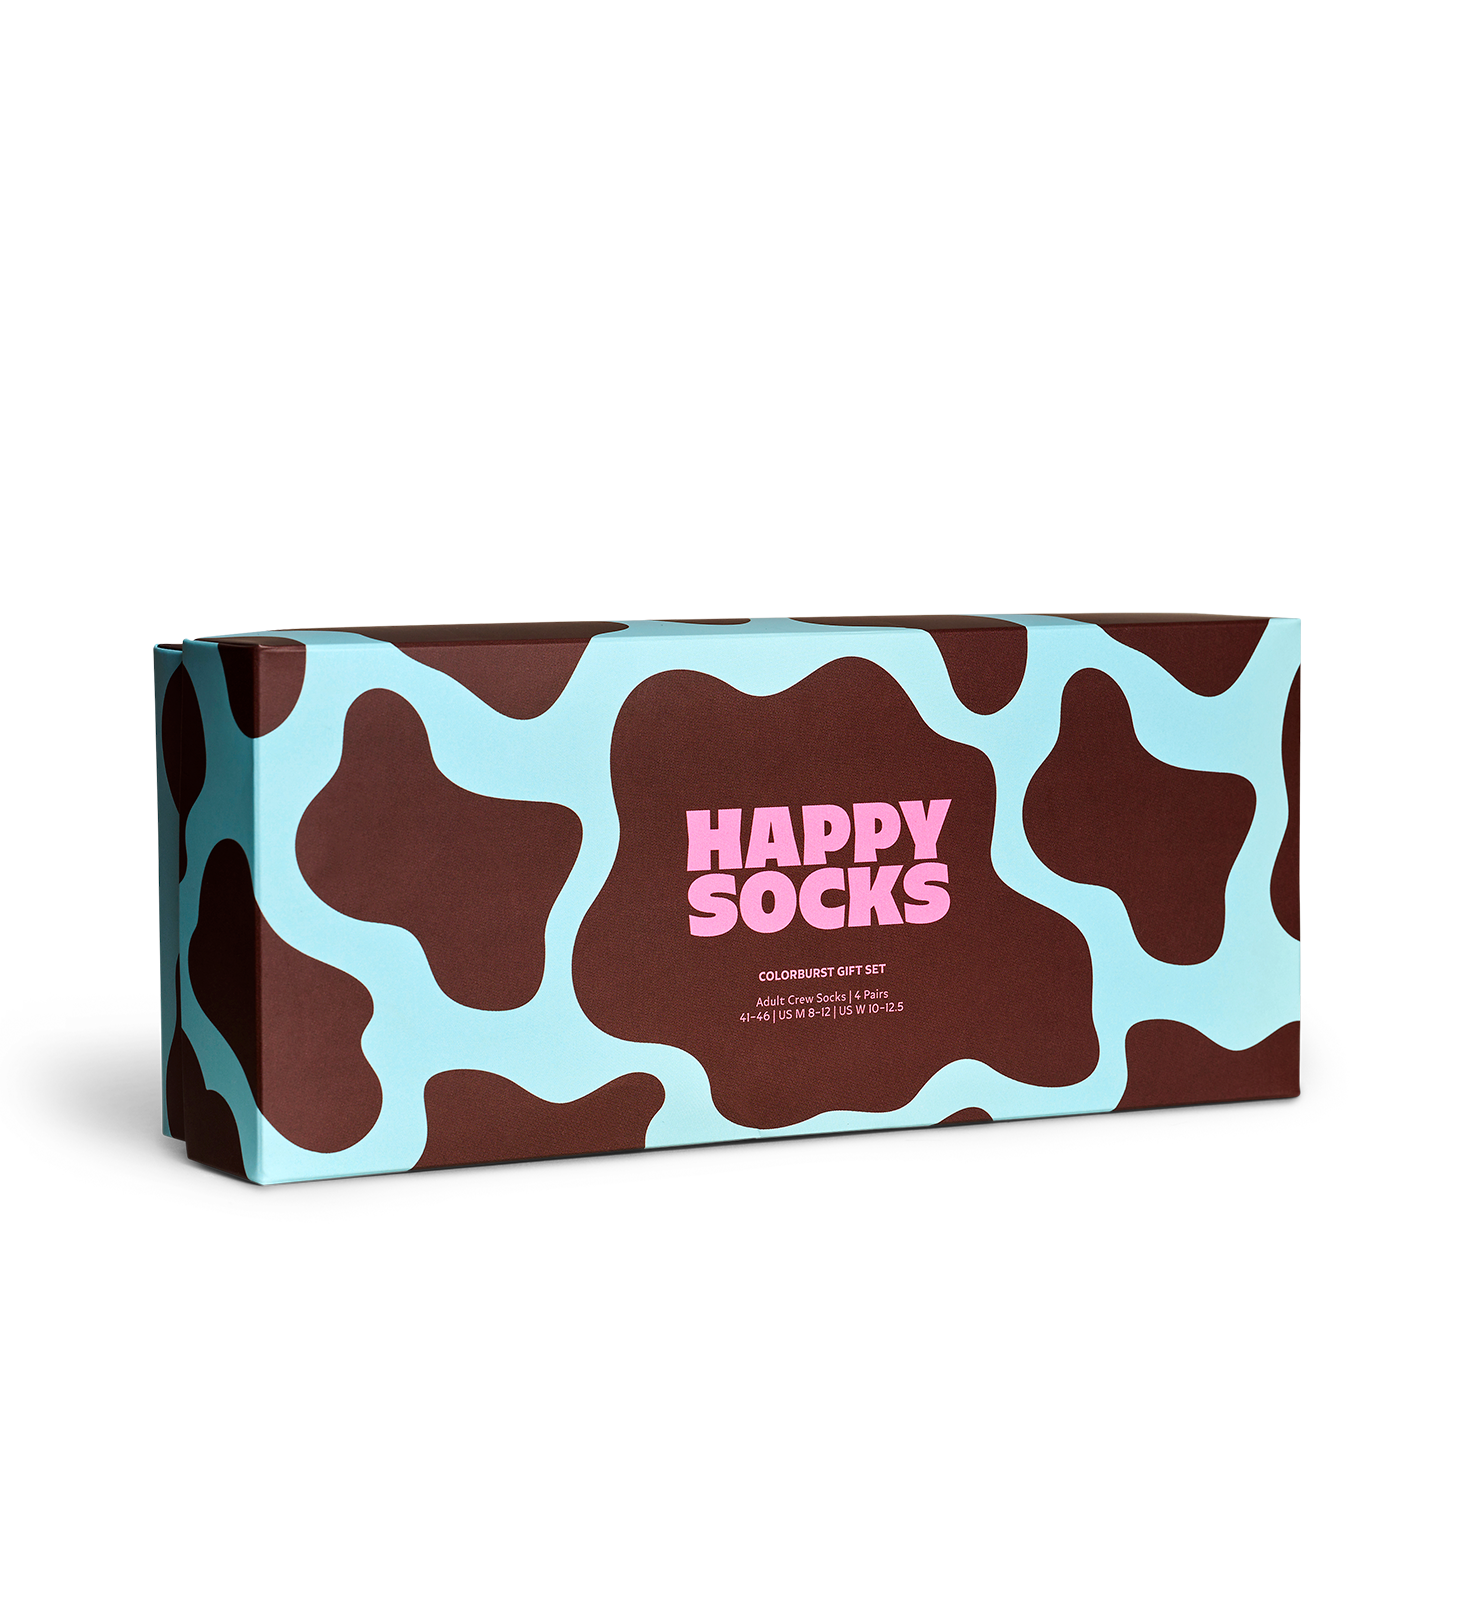 Happy Socks London Taxi Gift Box